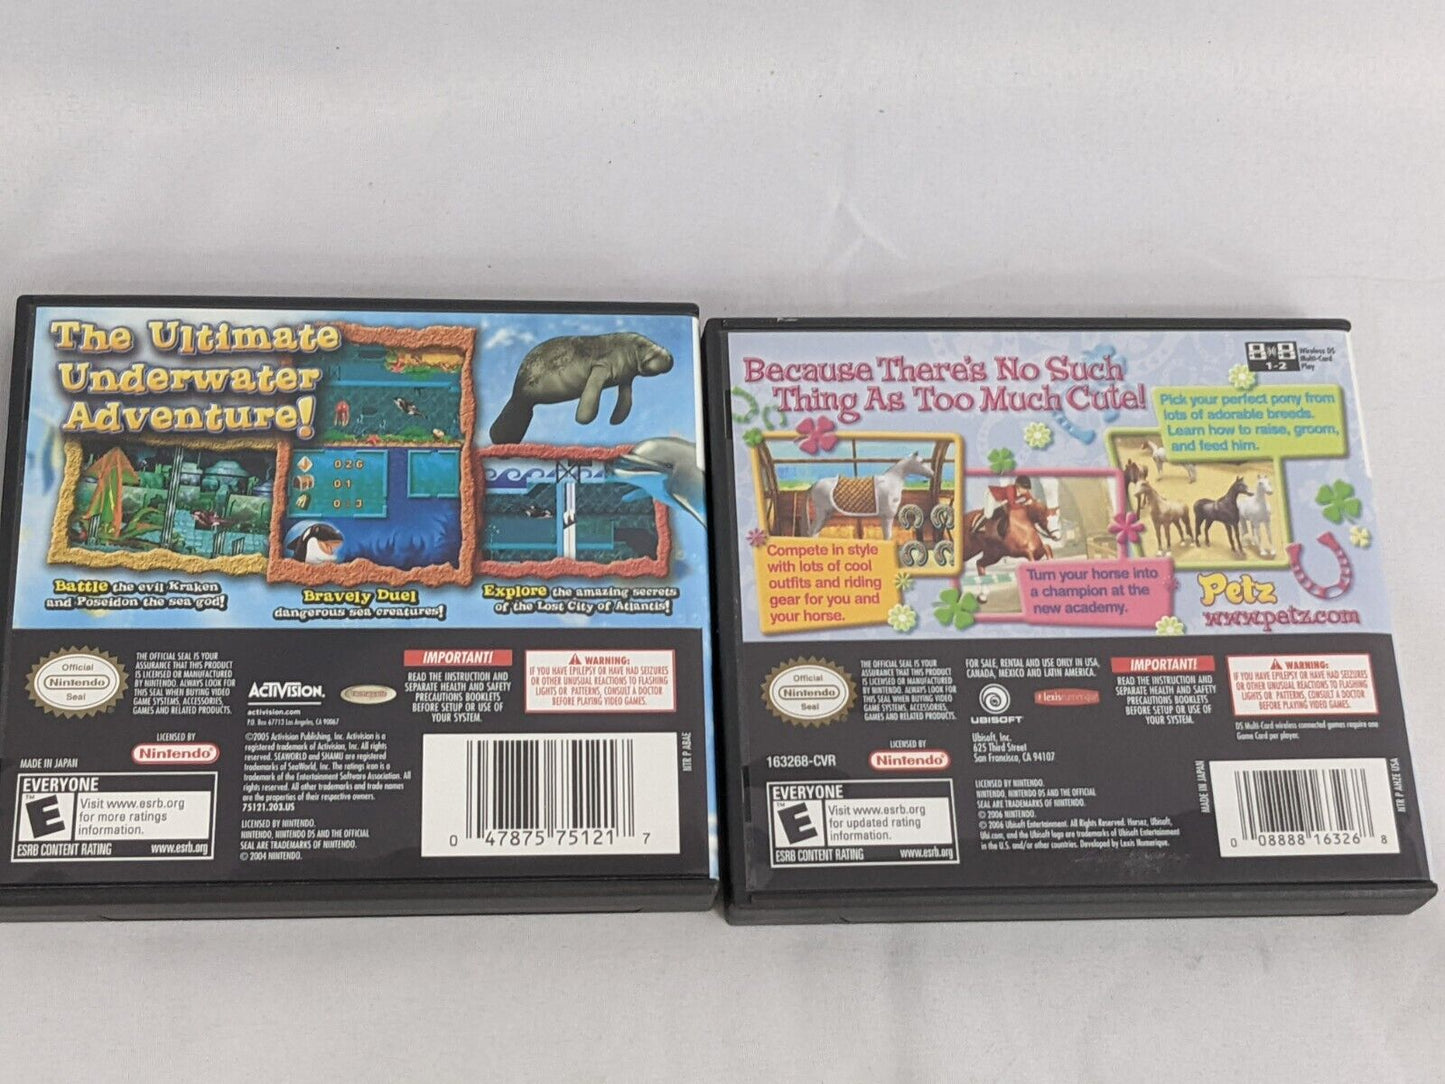 Horsez Shamu's Deep Sea Adventures Nintendo DS Cases Only! Lot of 2